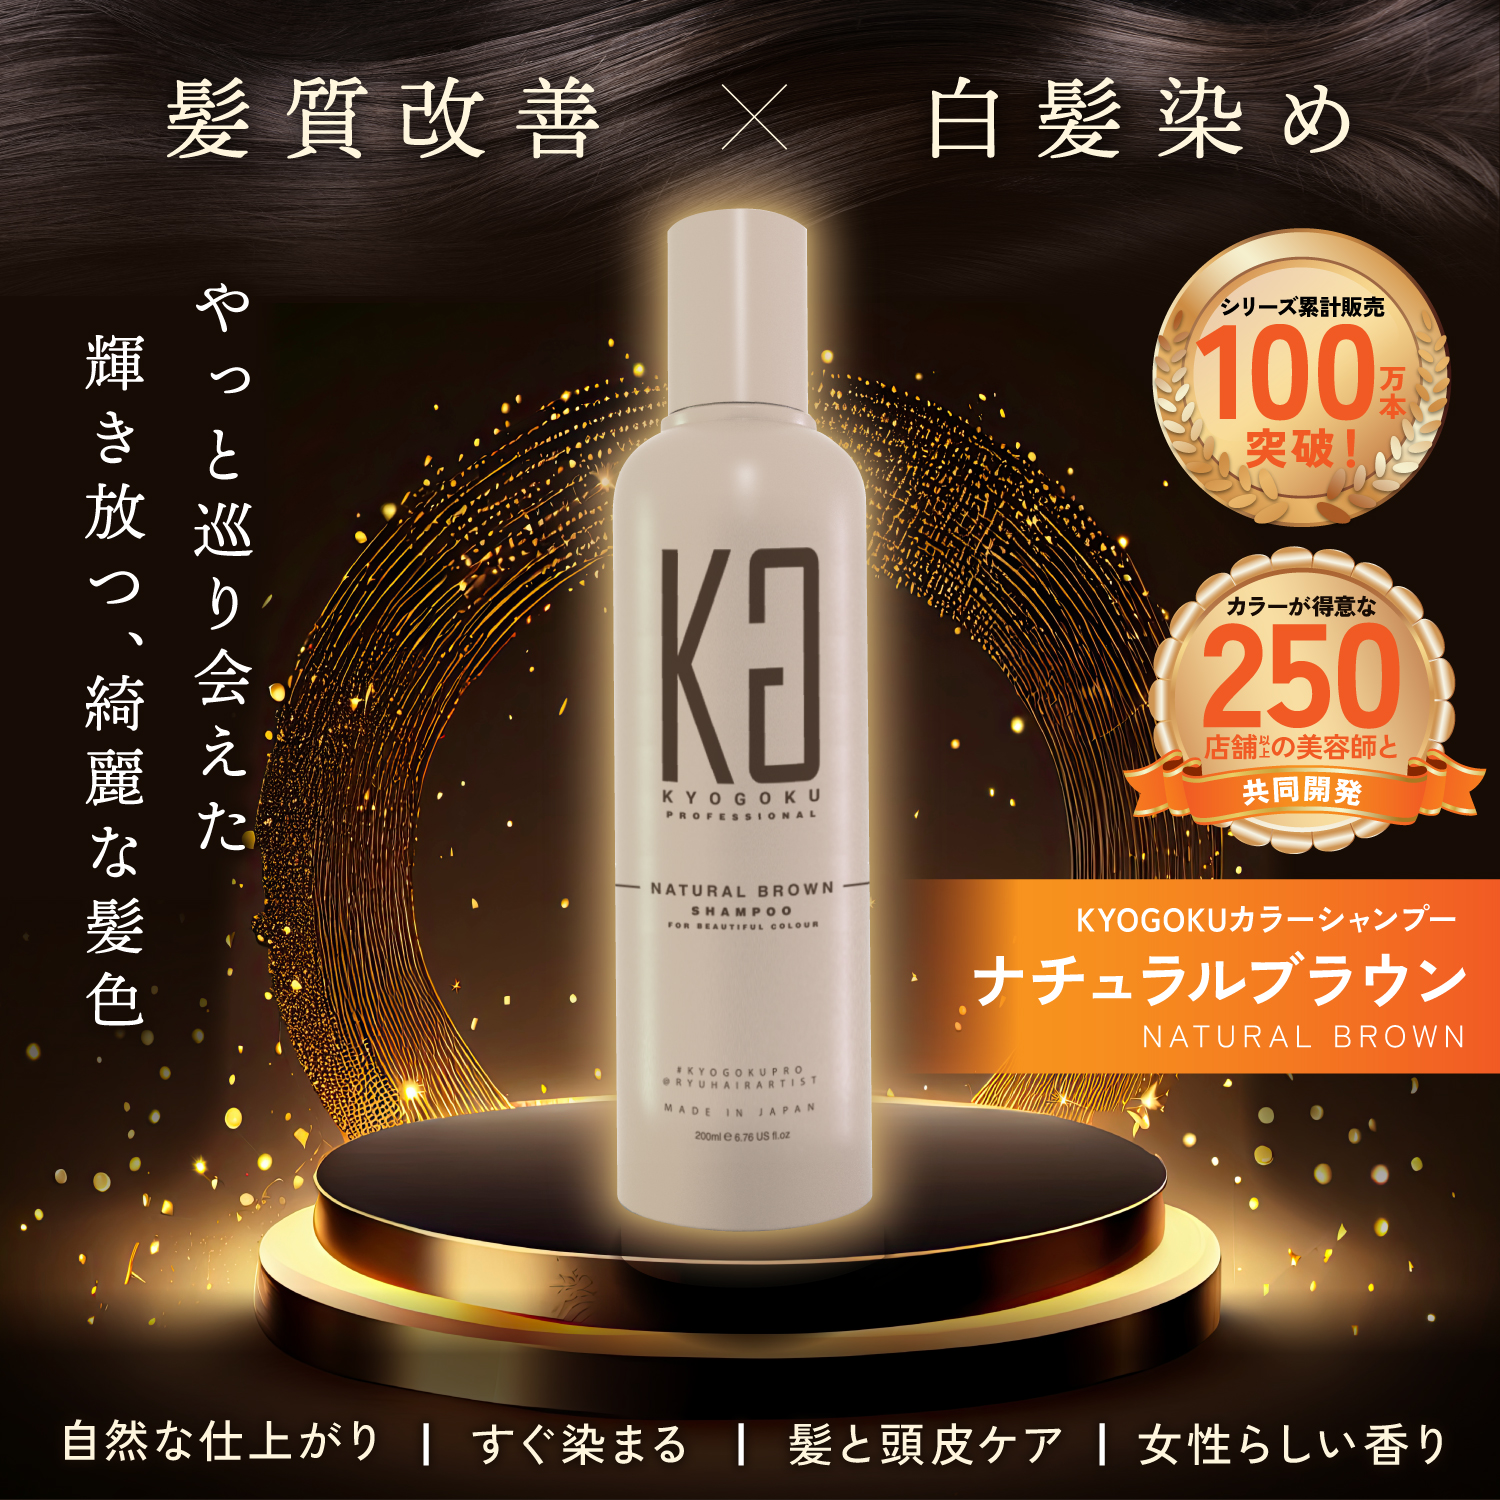 Kyogoku Professional / KYOGOKU カラーシャンプー ナチュラルブラウン